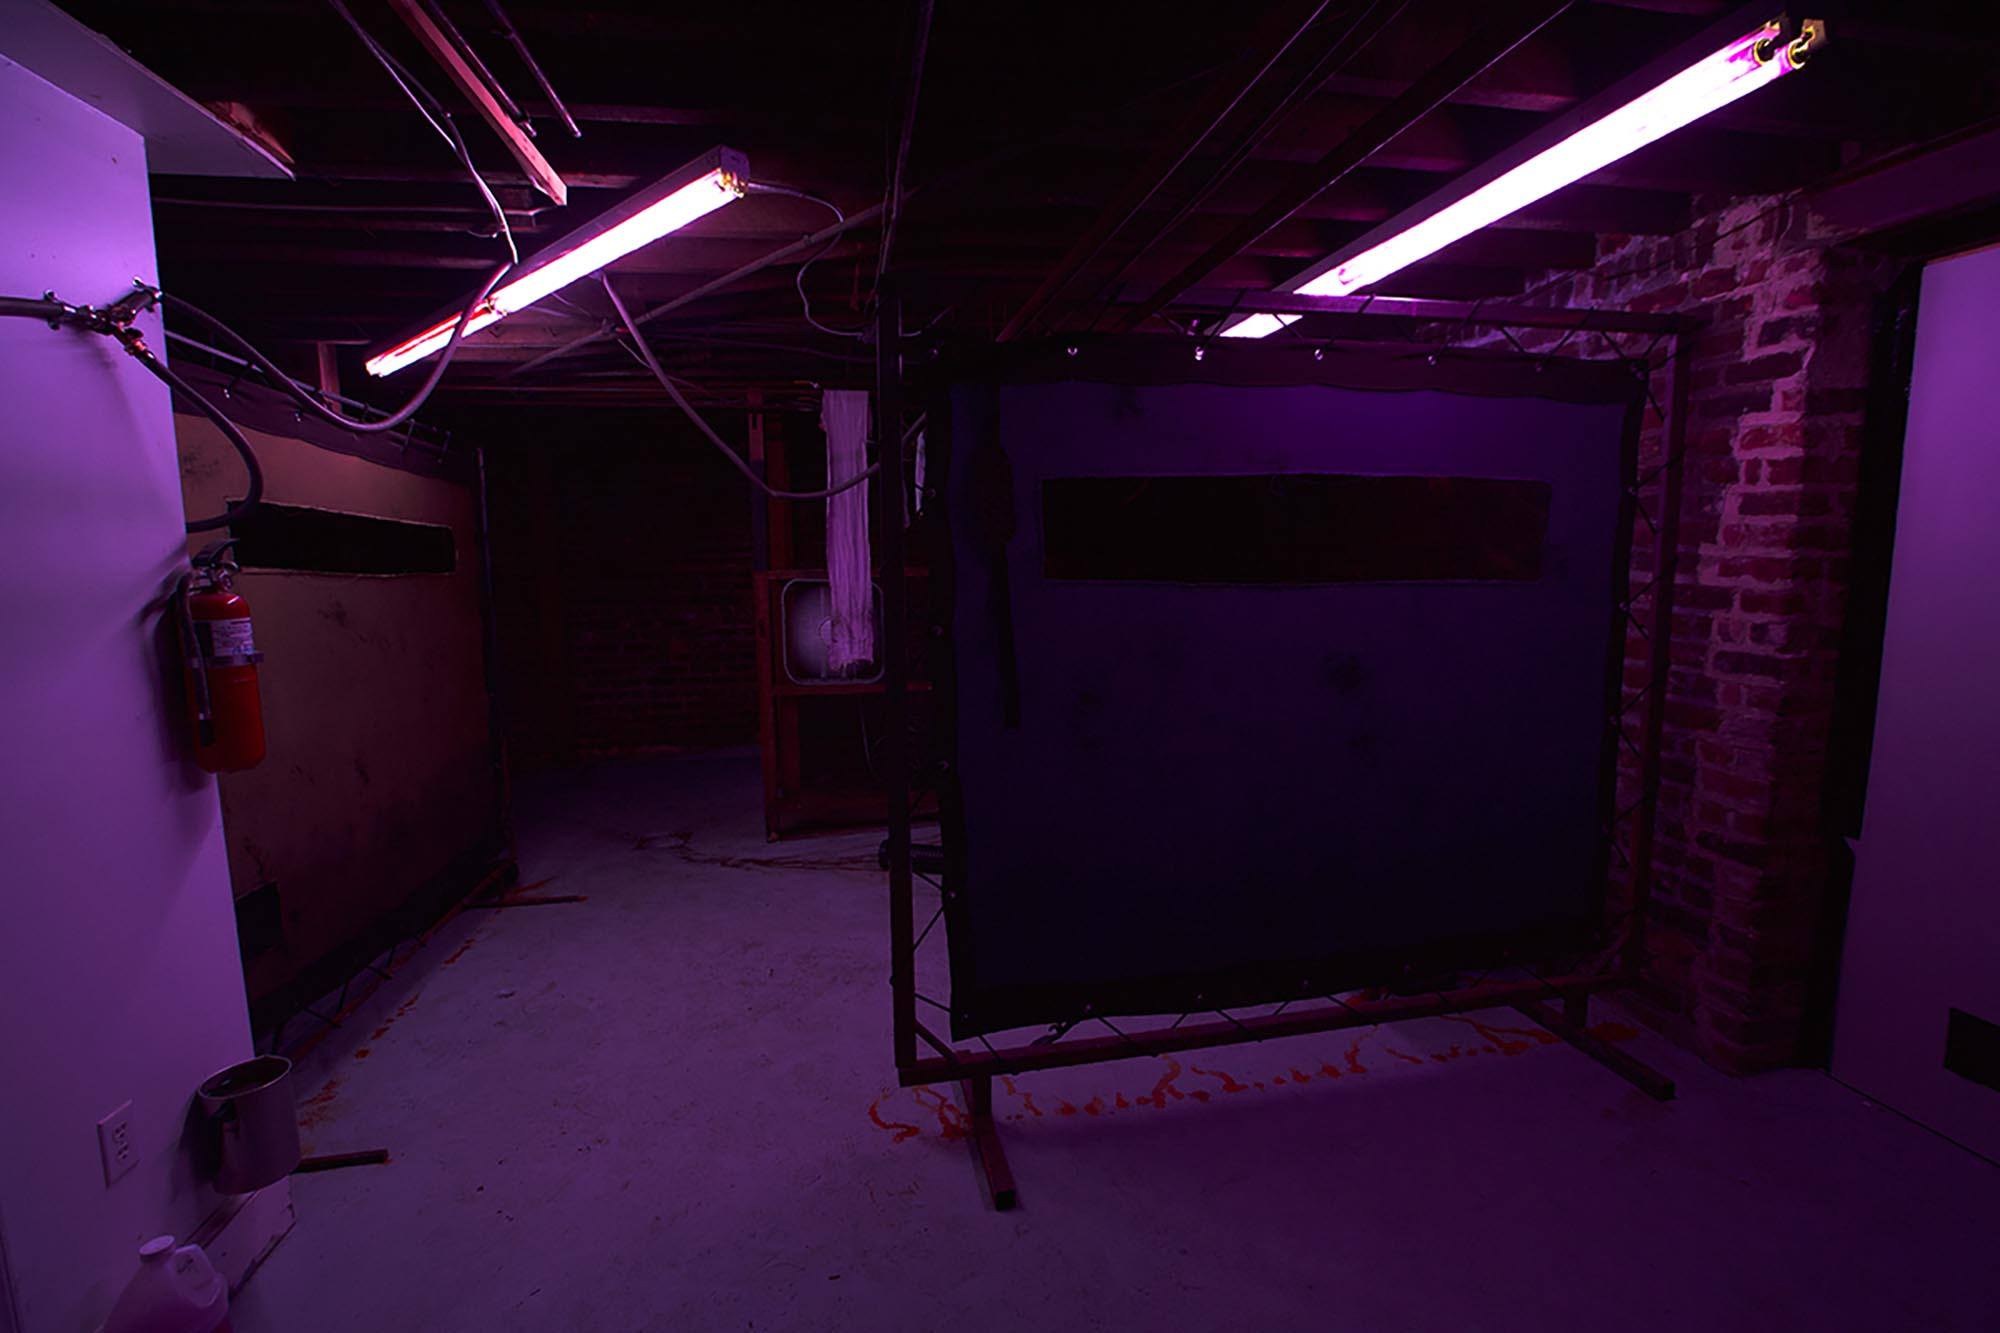 A purple illuminated unfinished room